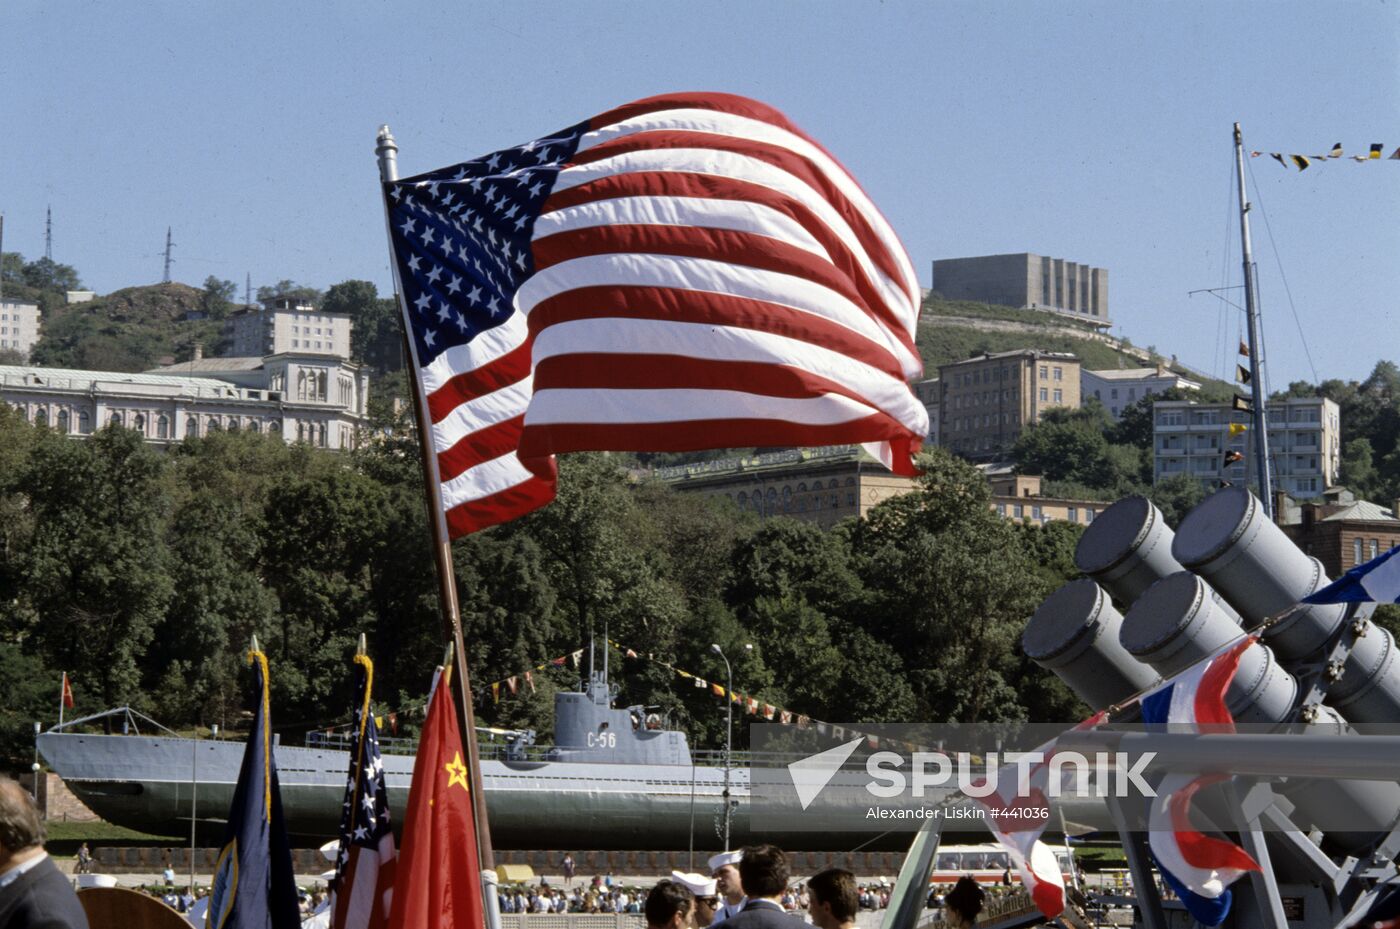 US flag and equipment at Vladivostok quay